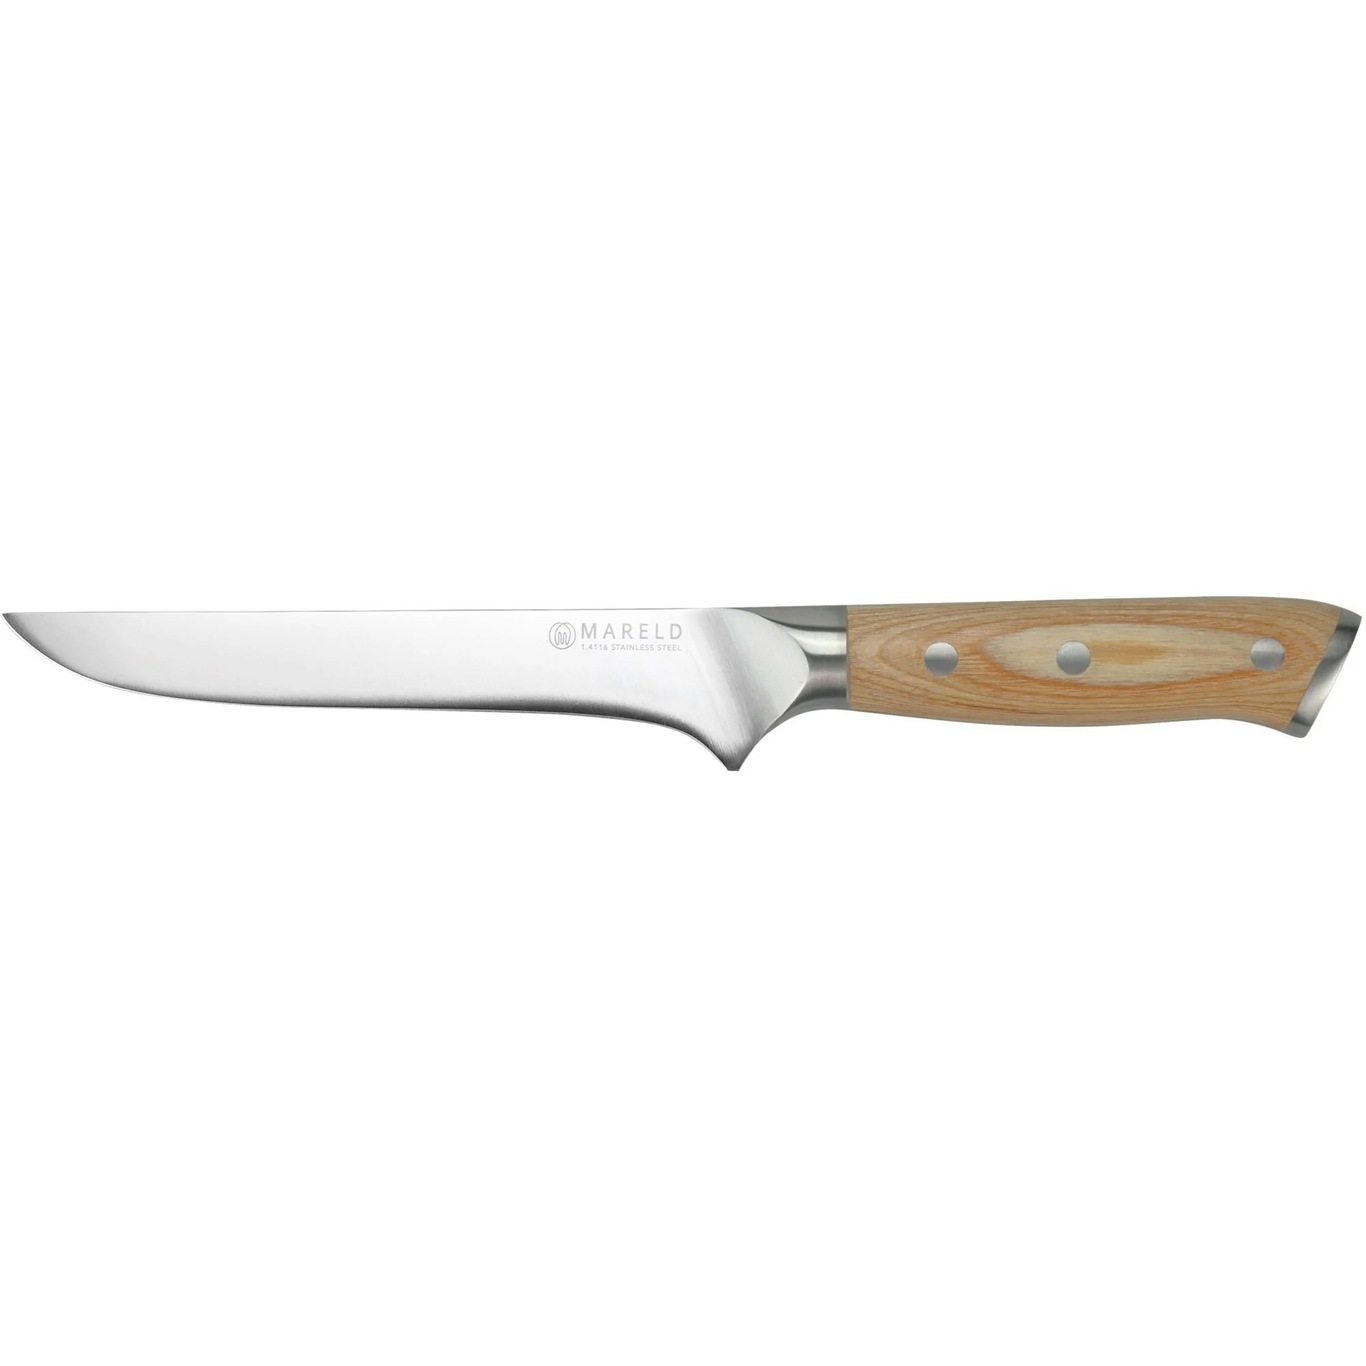 https://royaldesign.com/image/2/mareld-mareld-european-boning-knife-0?w=800&quality=80